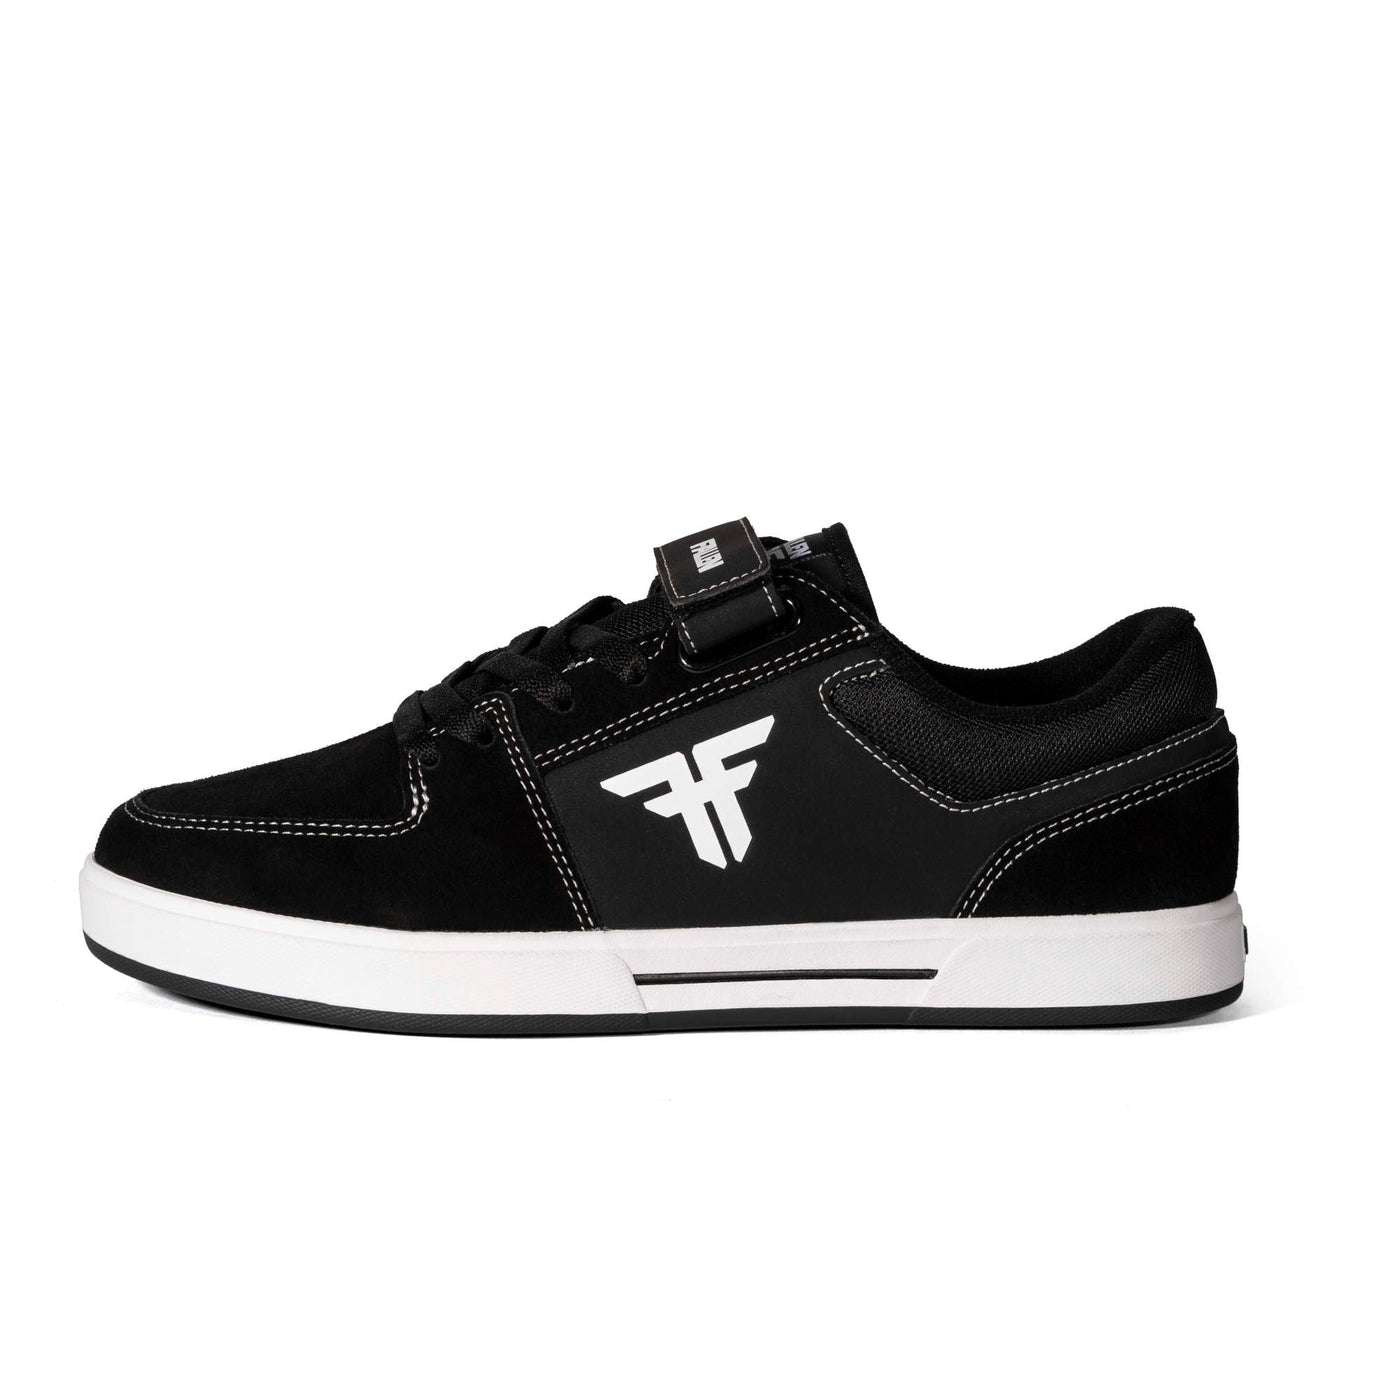 Fallen Footwear Patriot Strap skate shoes in Black / White side image